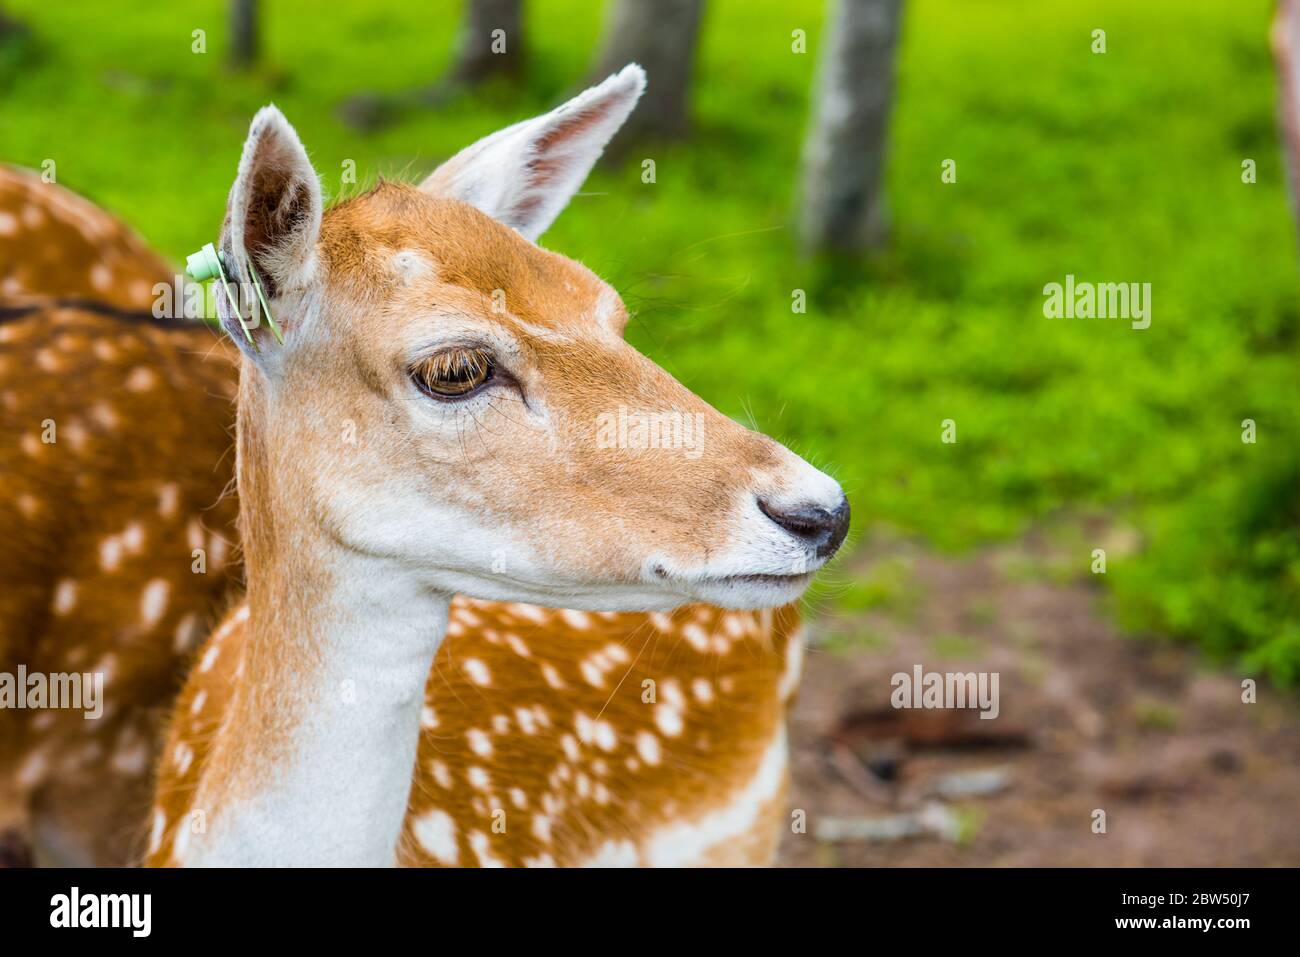 Deer close-up amid green grass park background Stock Photo